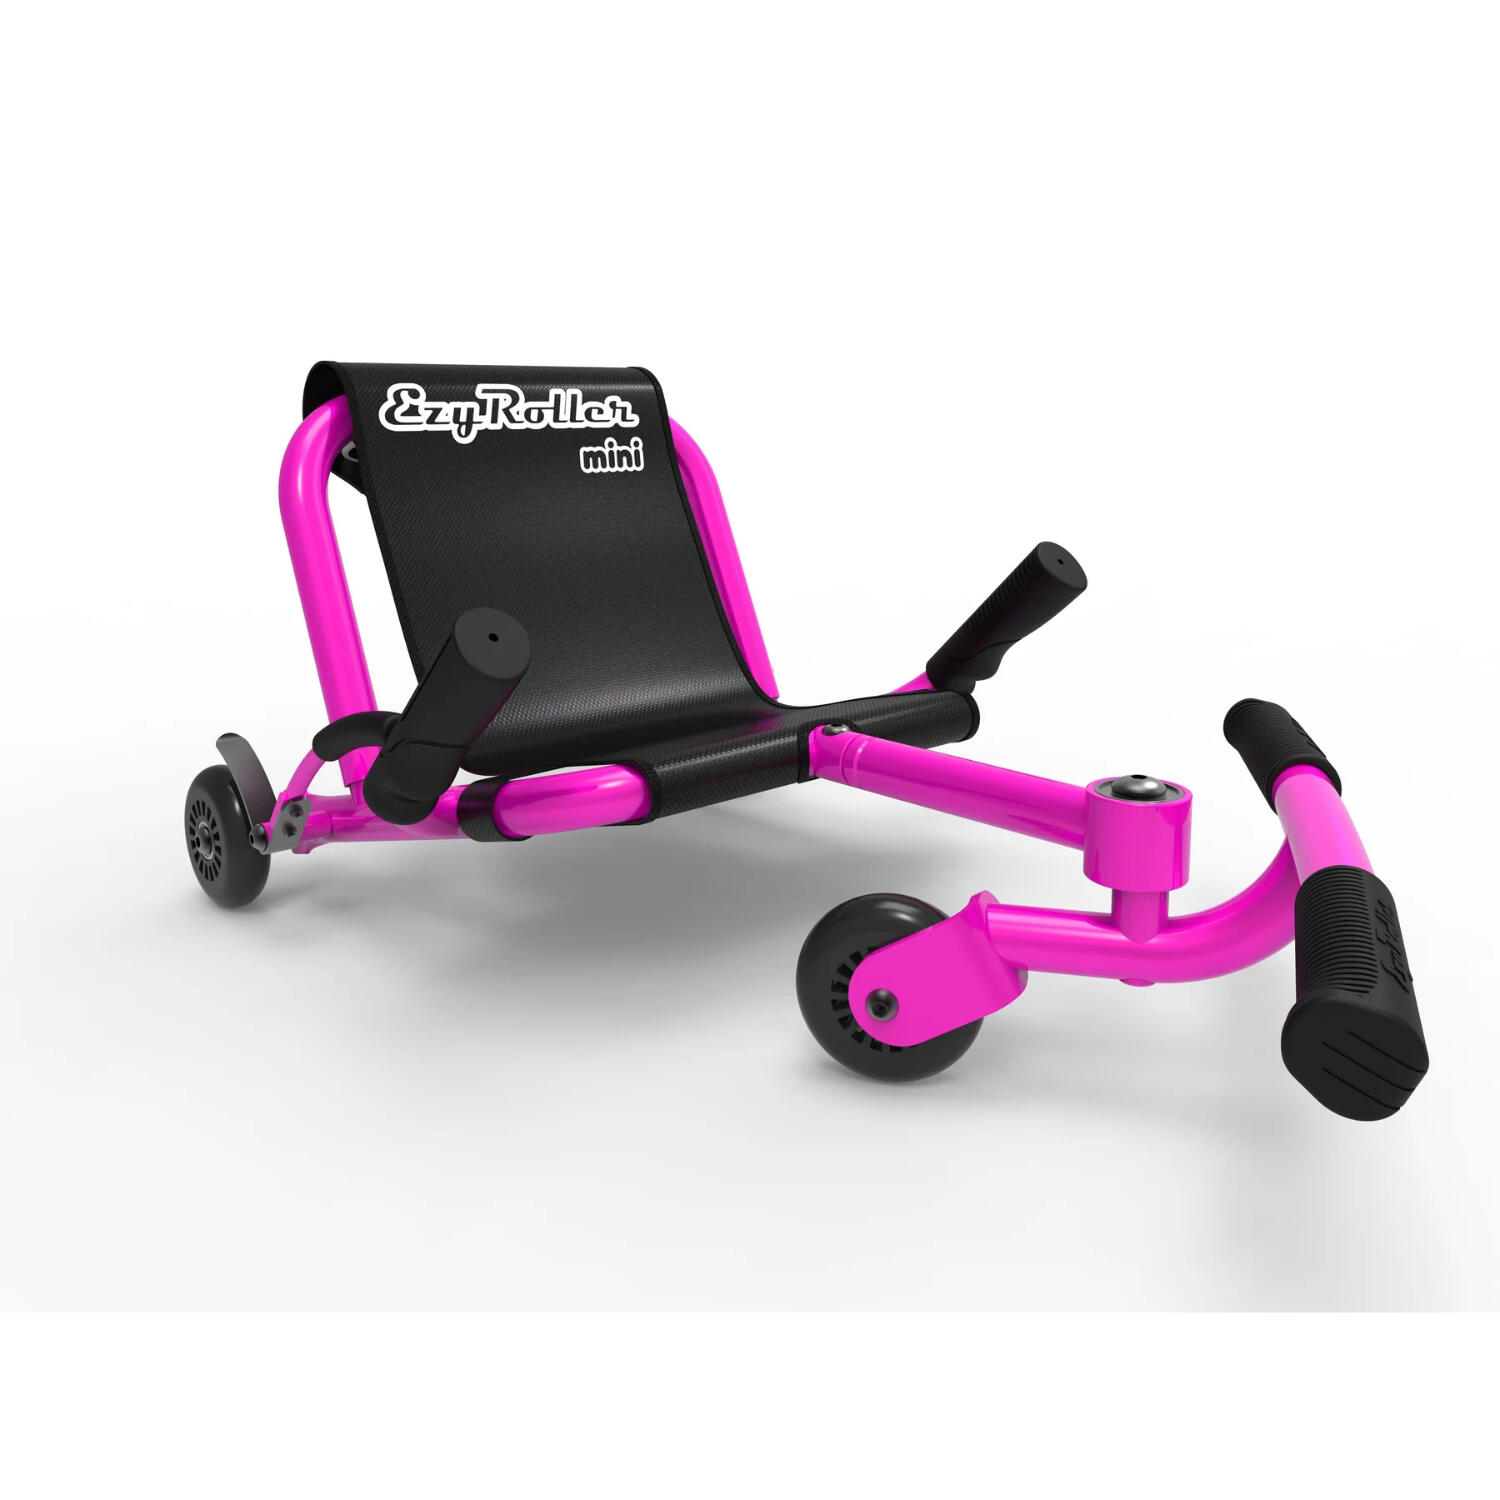 EzyRoller Mini Ride On - Pink 1/4